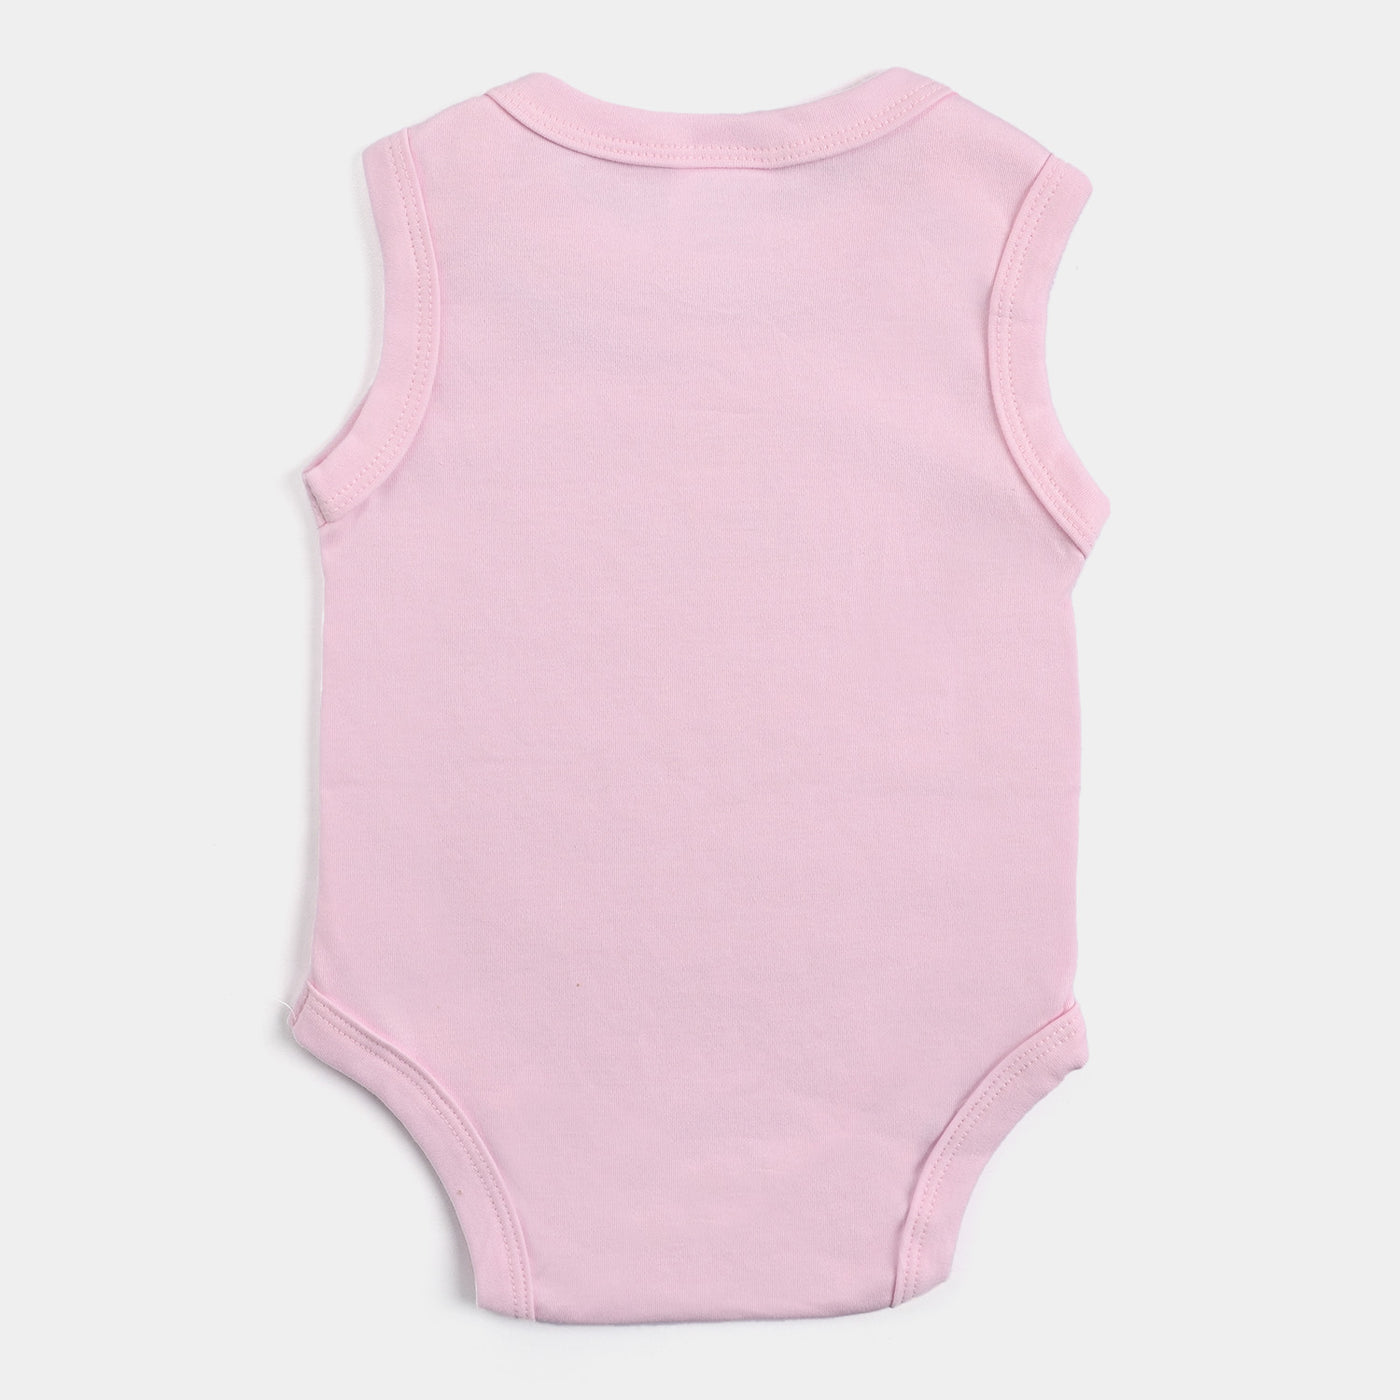 Infant Girls Cotton Interlock 3PCs Set -White/Pink